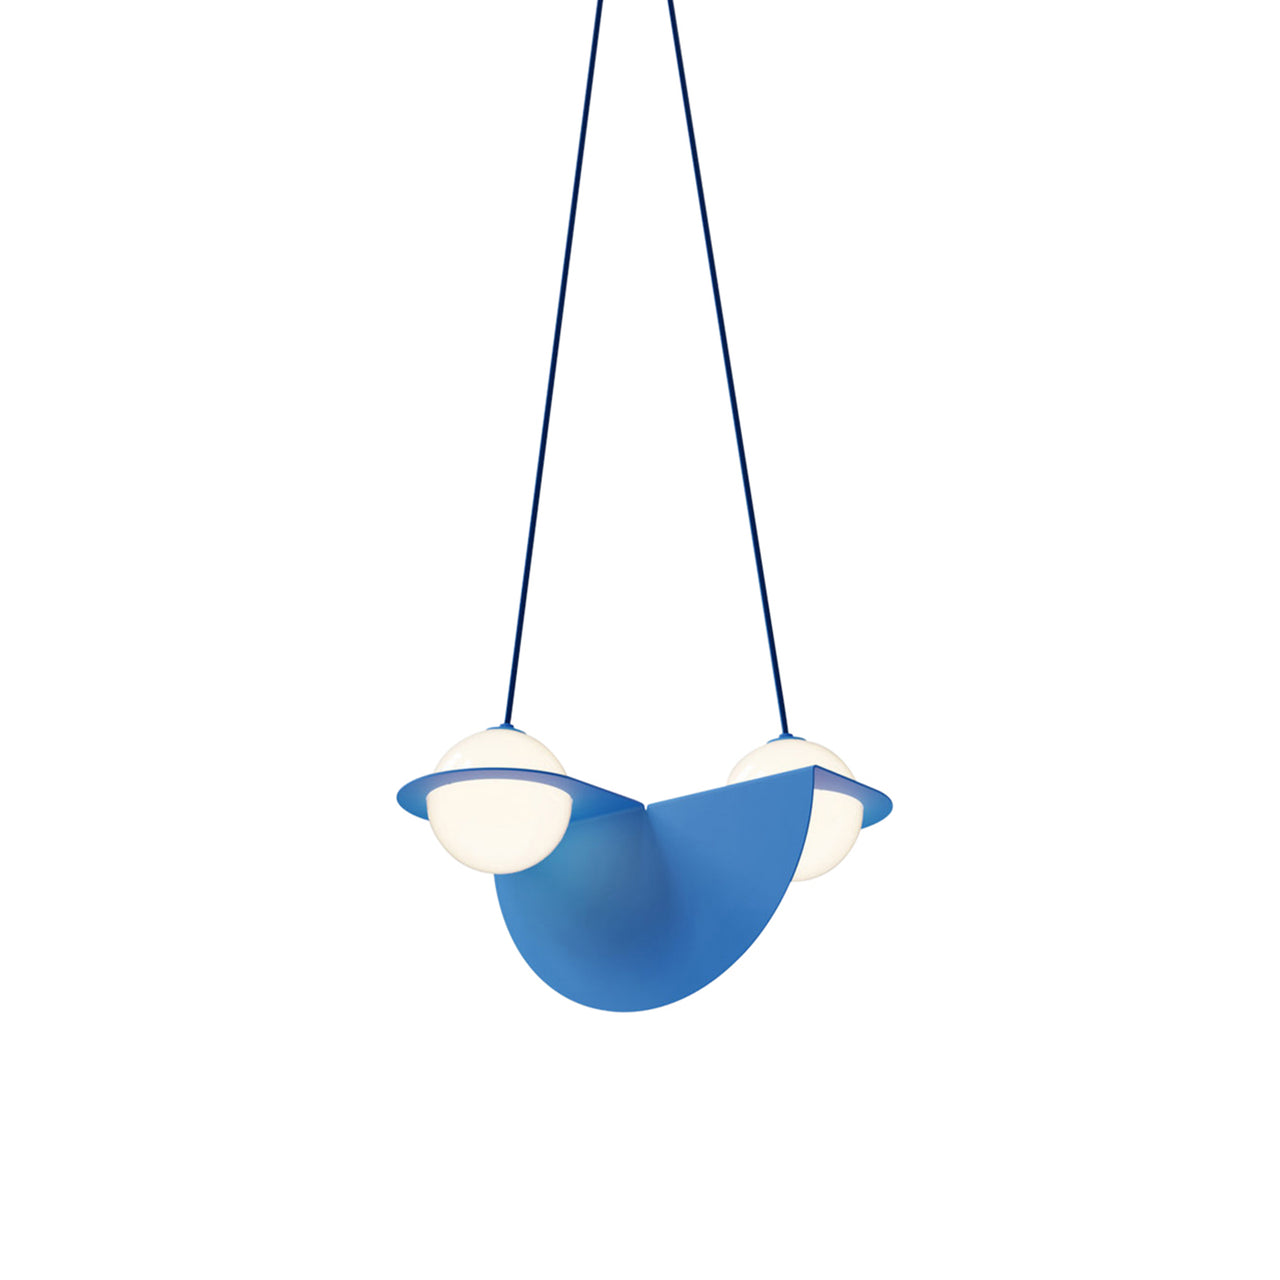 Laurent 01 Suspension Lamp: Blue + Blue + Angled Wires